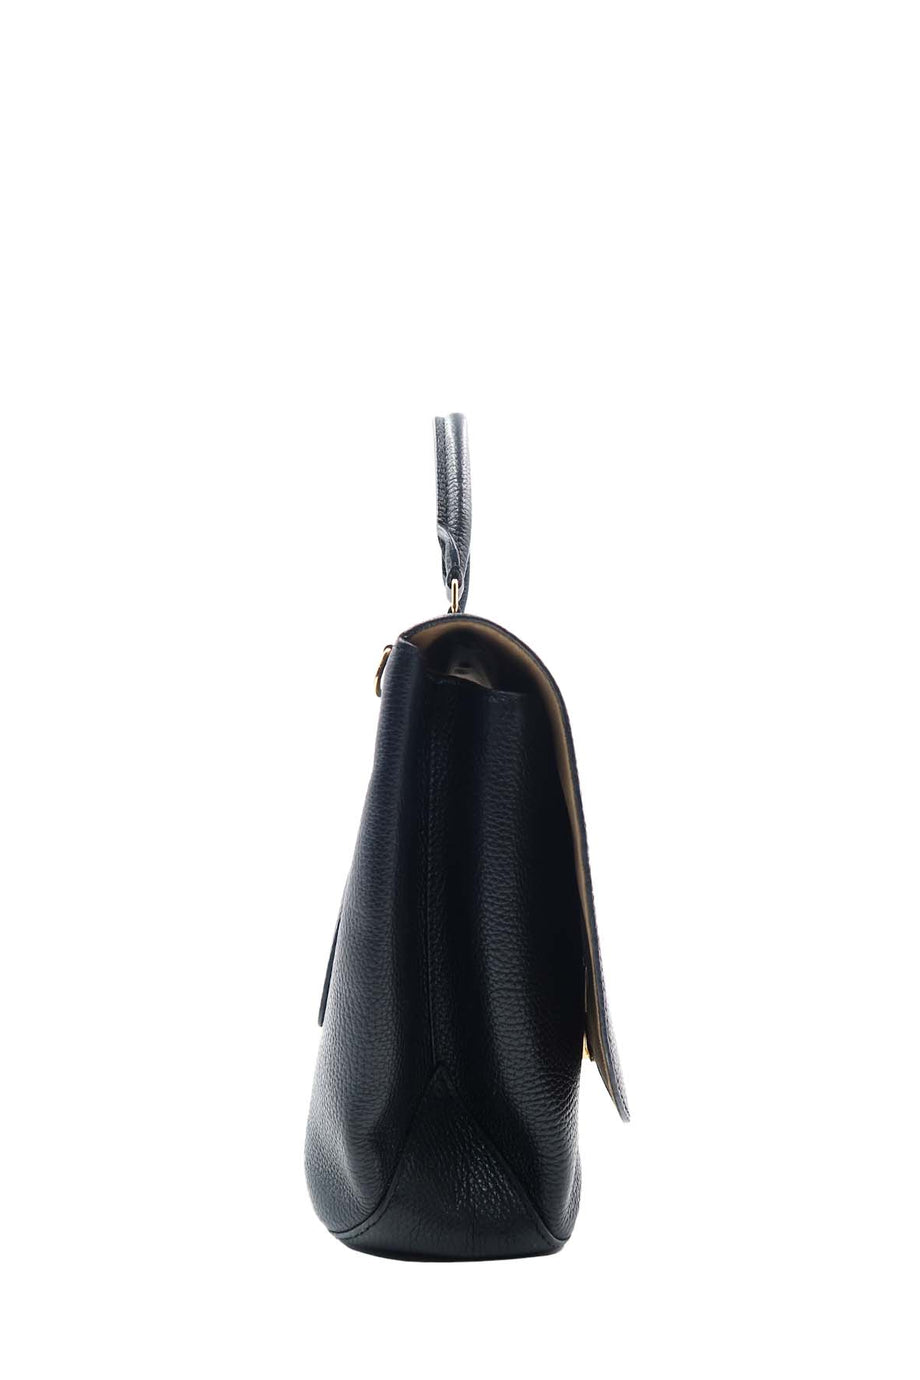 LOUIS VUITTON Black Taurillon Leather Volta Bag/ Hand bag, Excellent  condition For Sale at 1stDibs